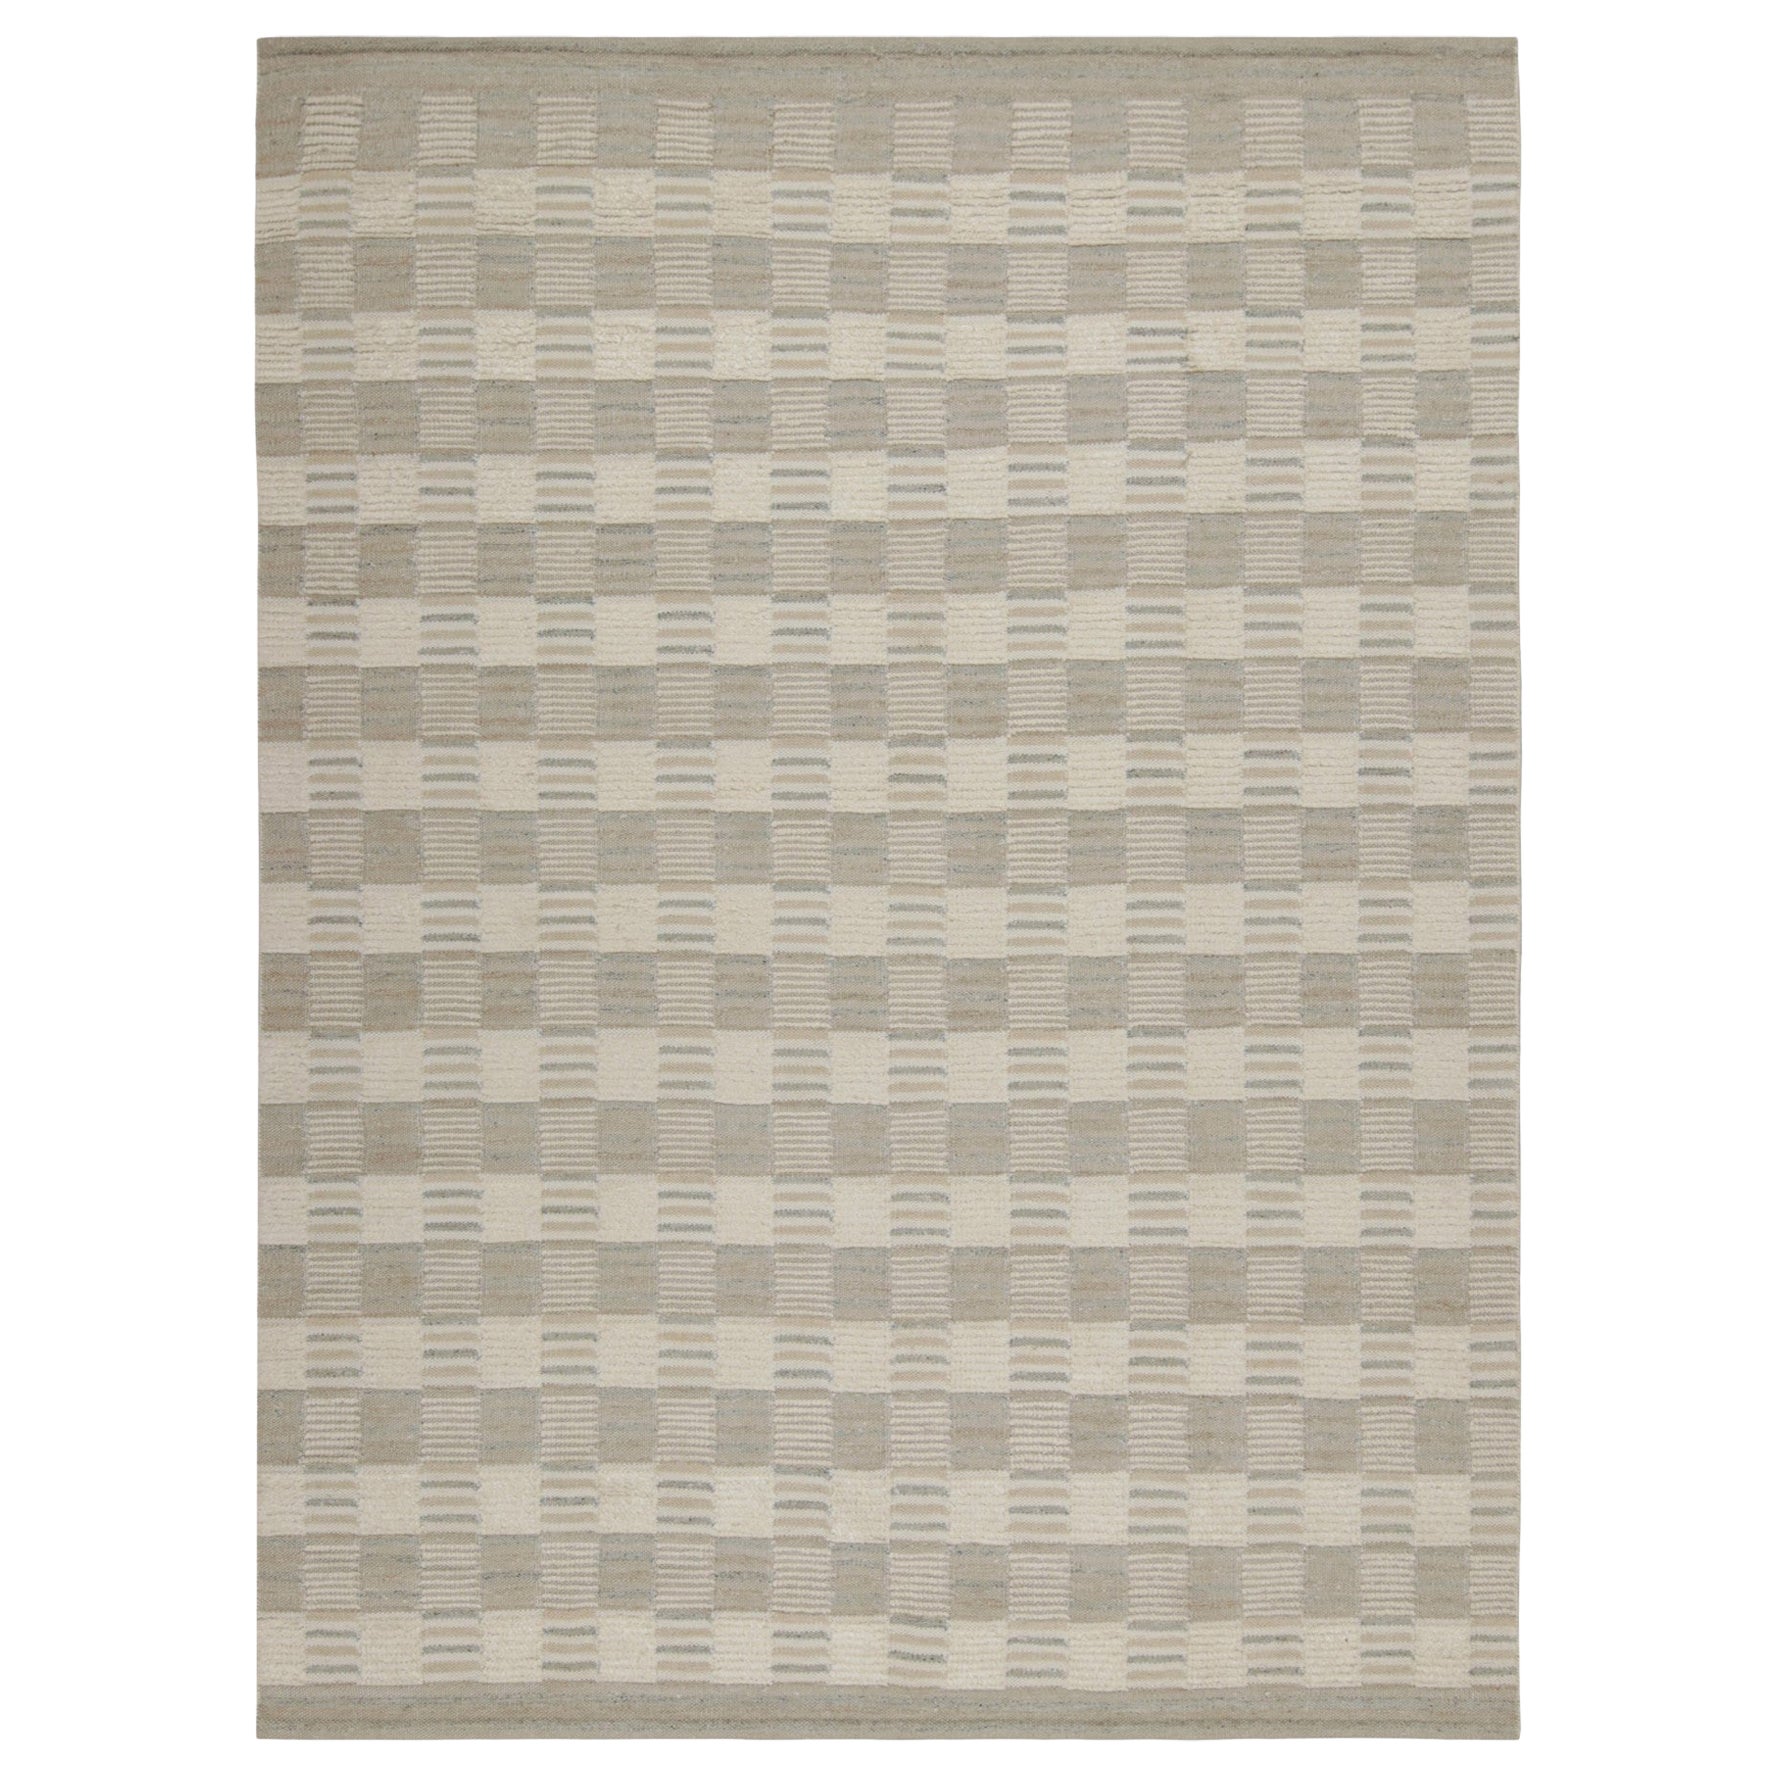 Rug & Kilim’s Scandinavian Style Rug with Grey & White Geometric Patterns